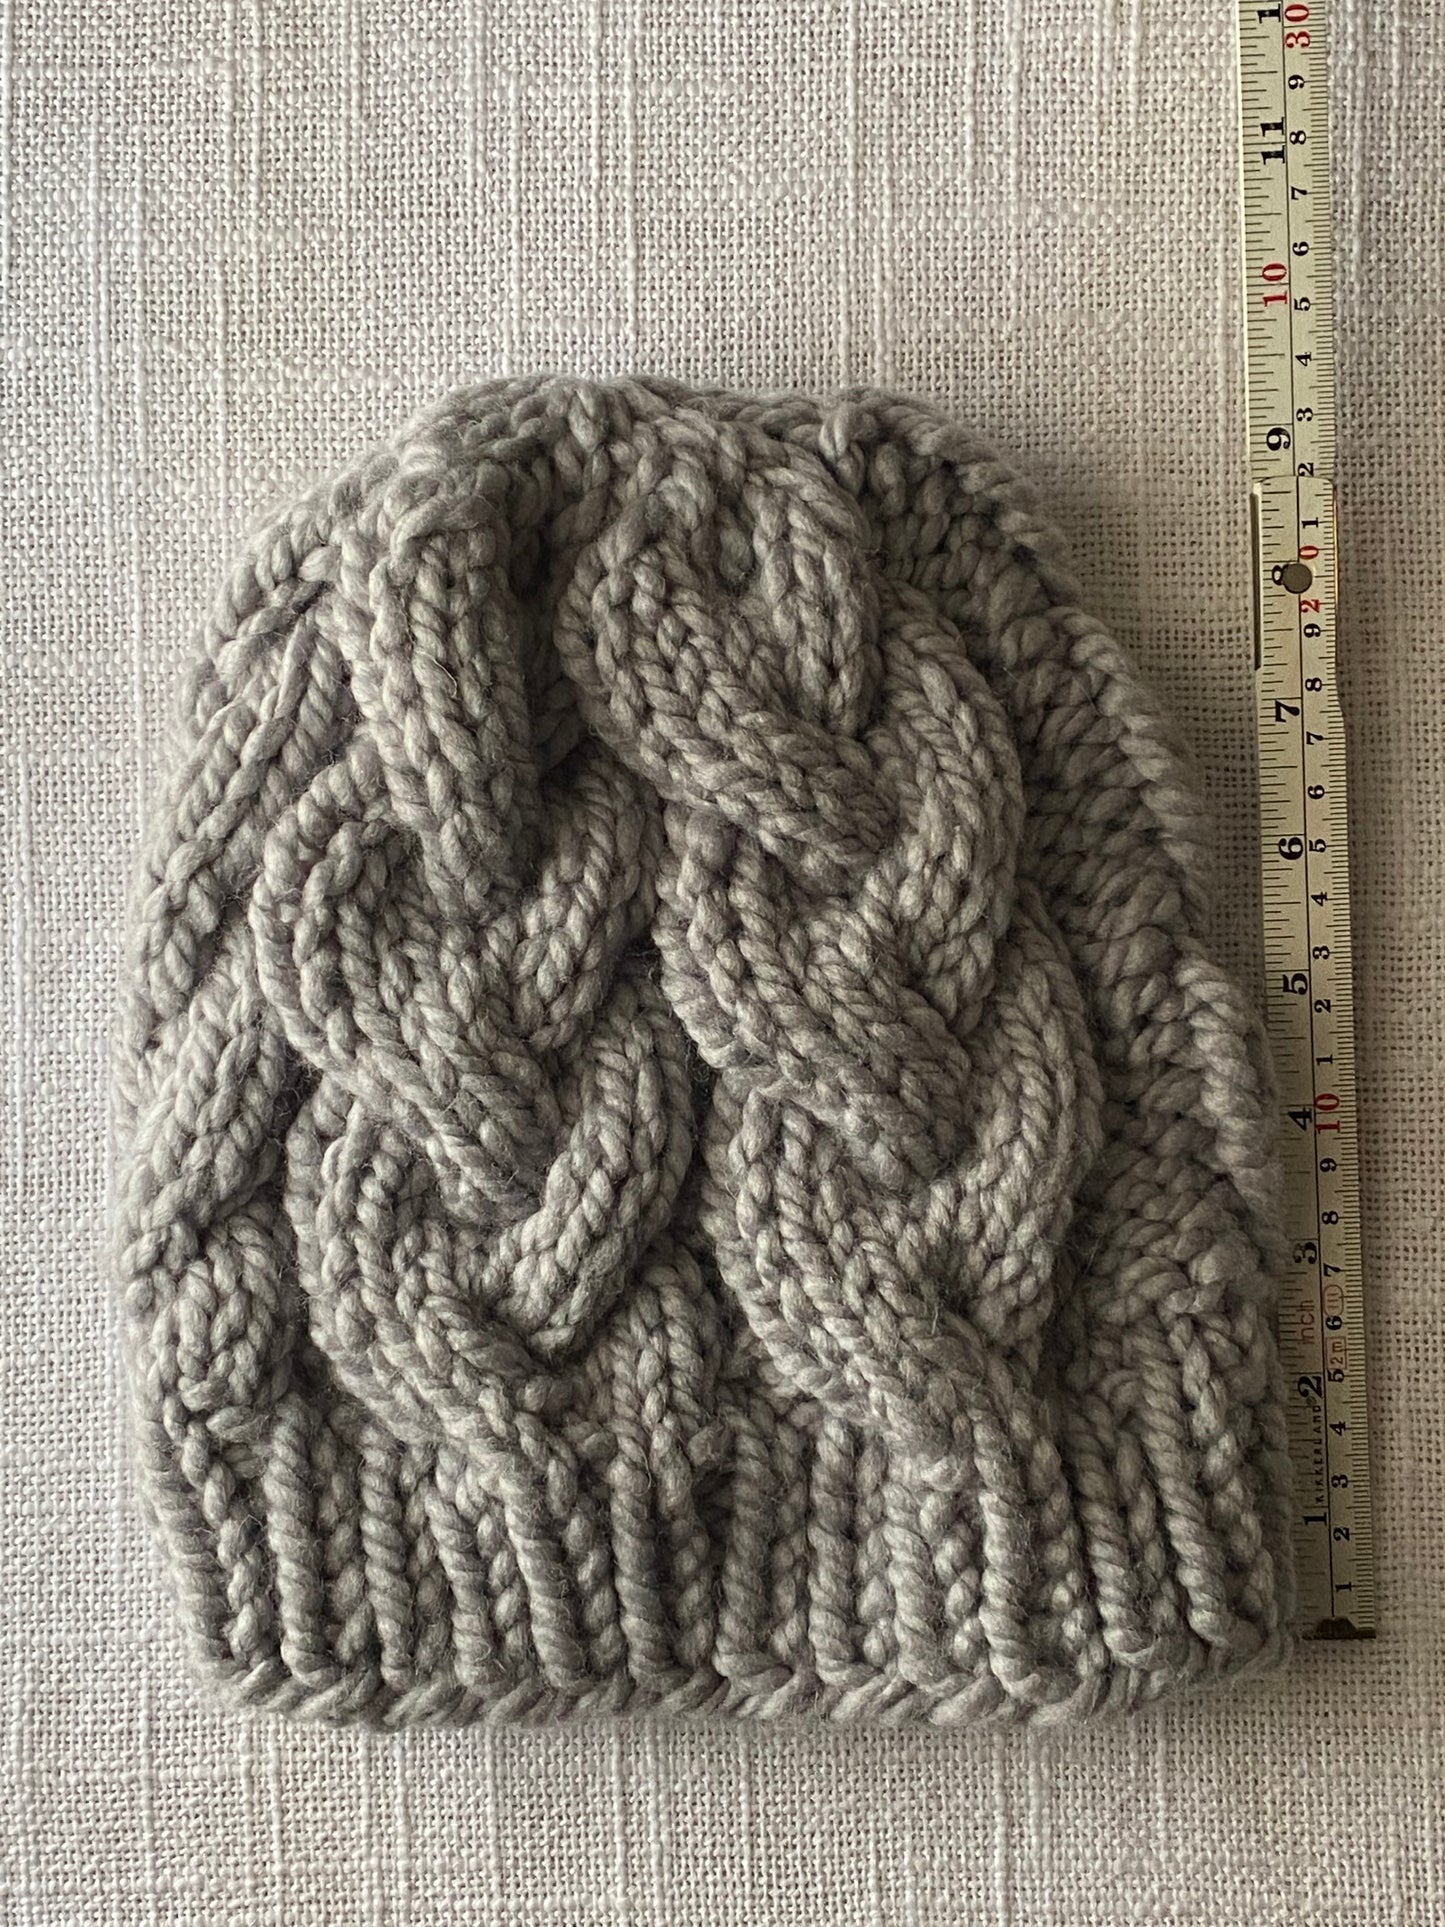 Cozy Cables Hat - Wool Blend Fiber